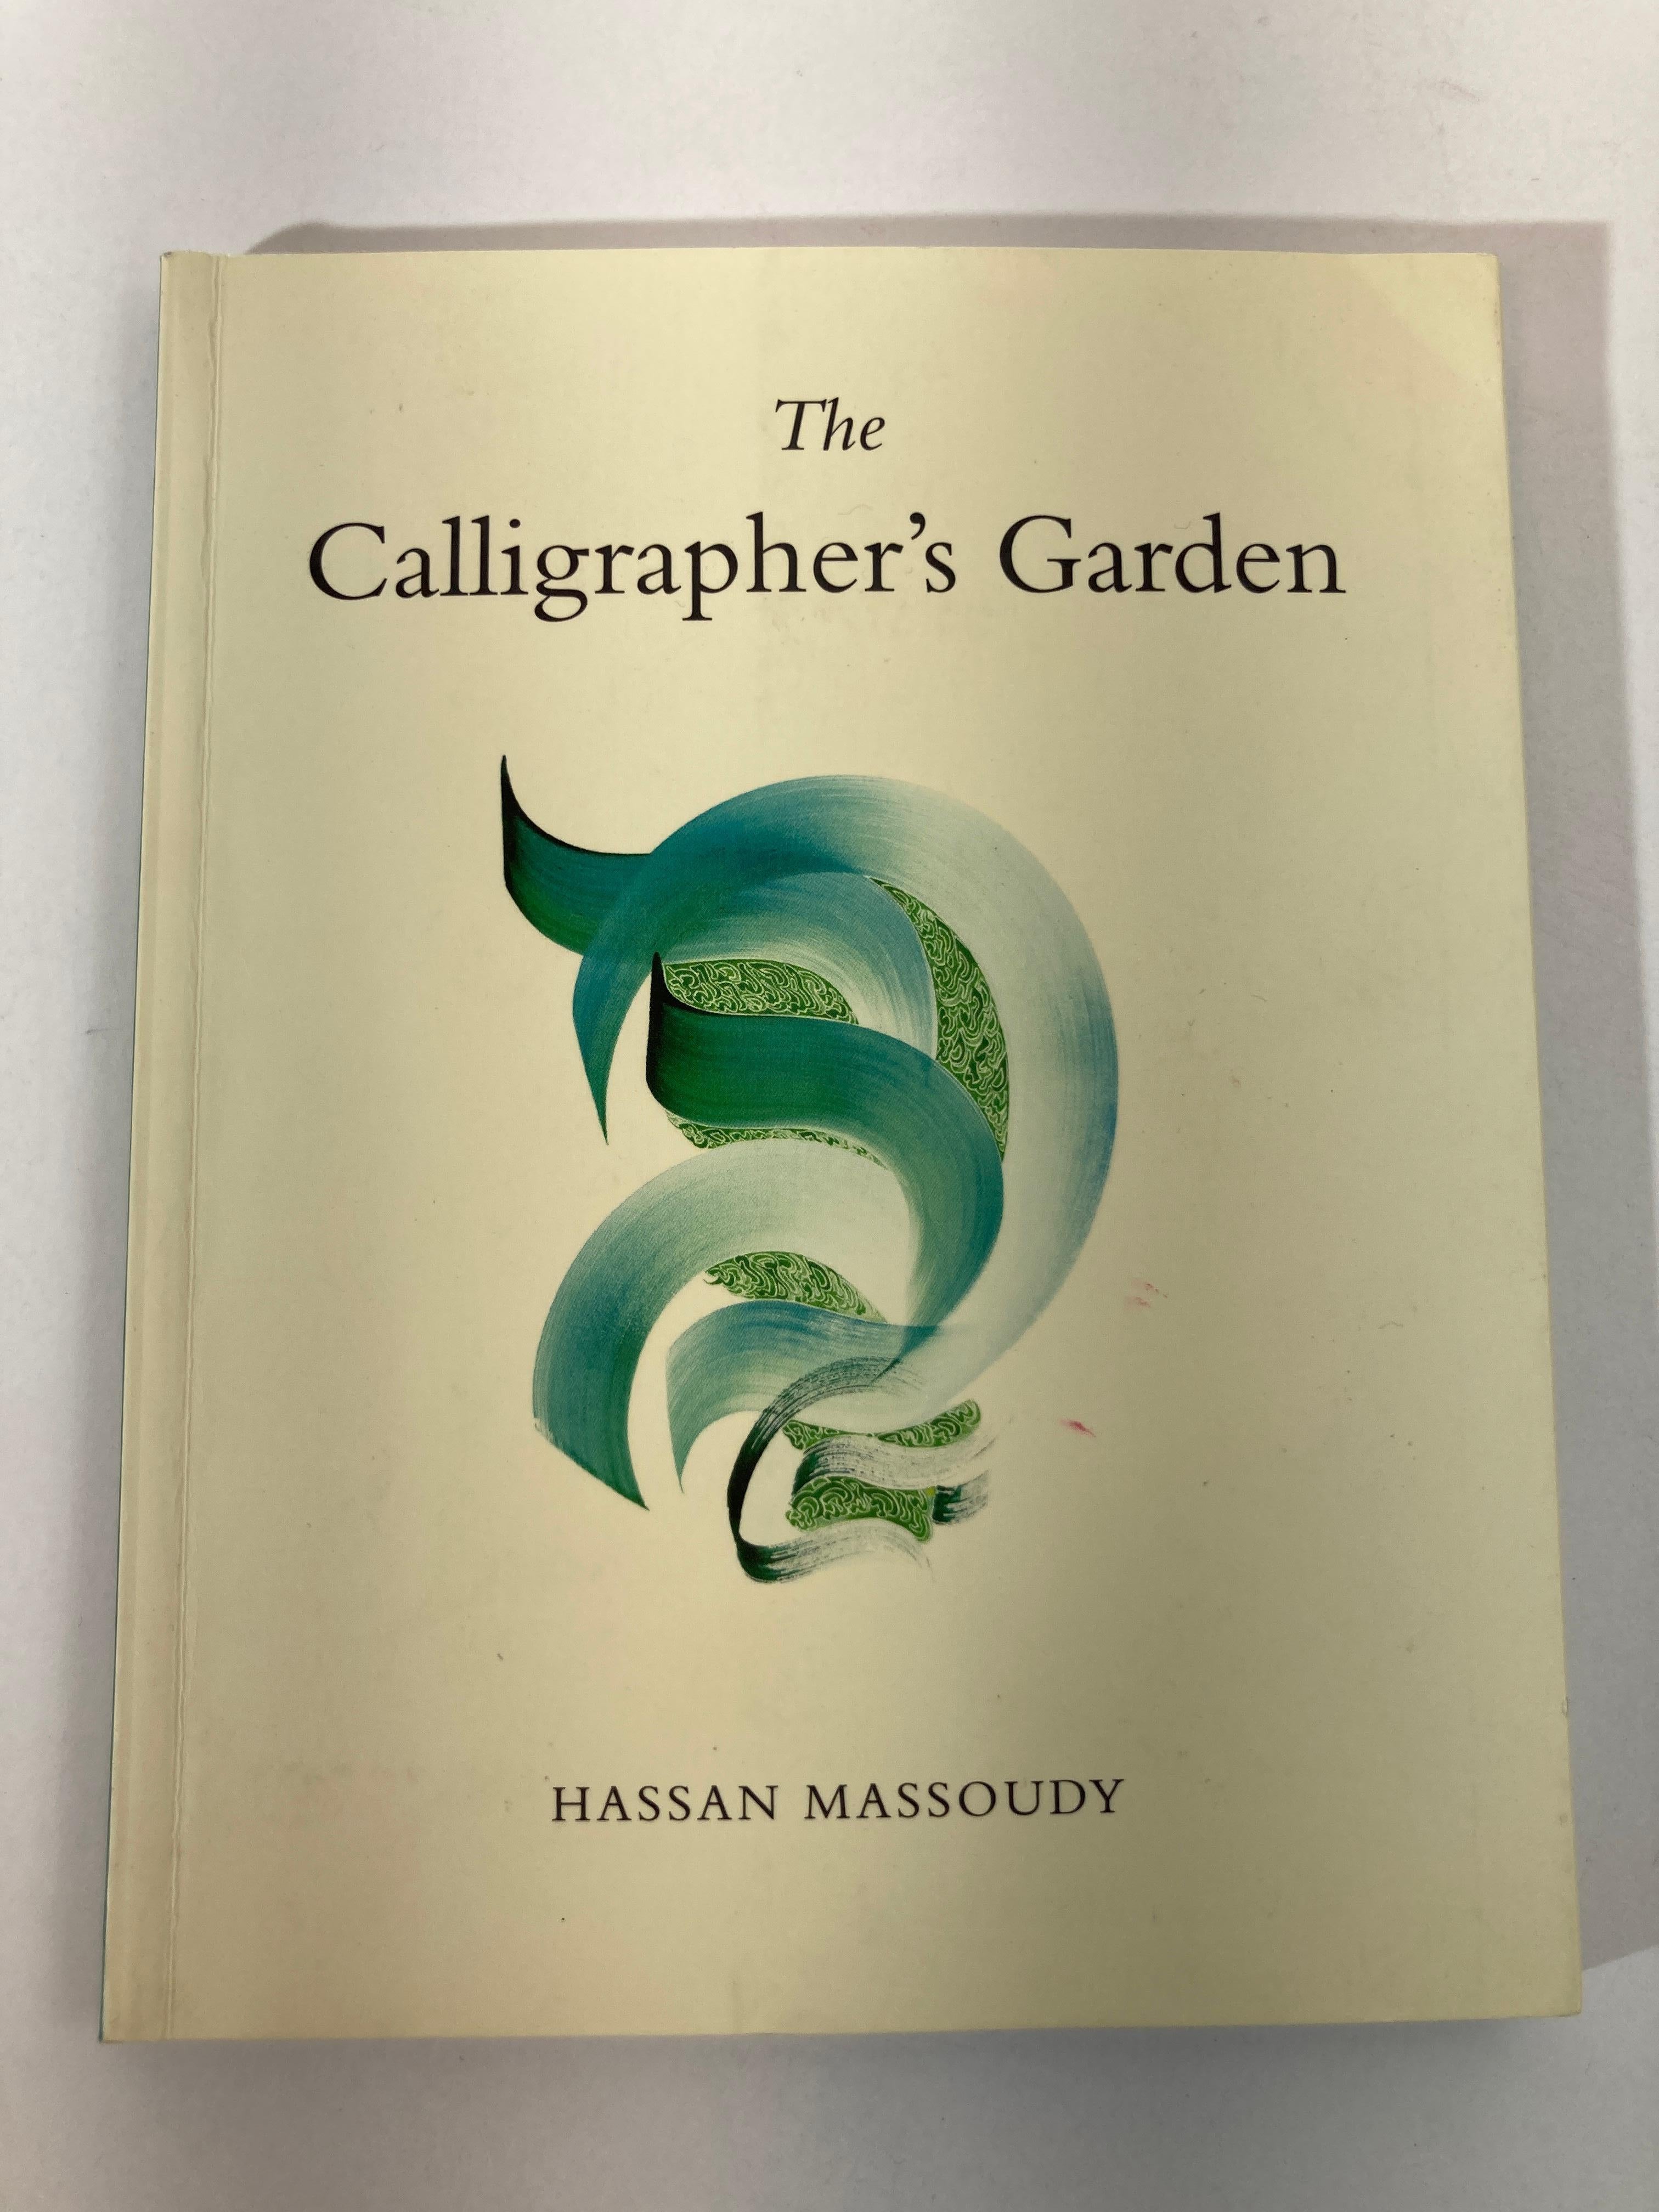 American Calligrapher's Garden by Hassan Massoudy Book